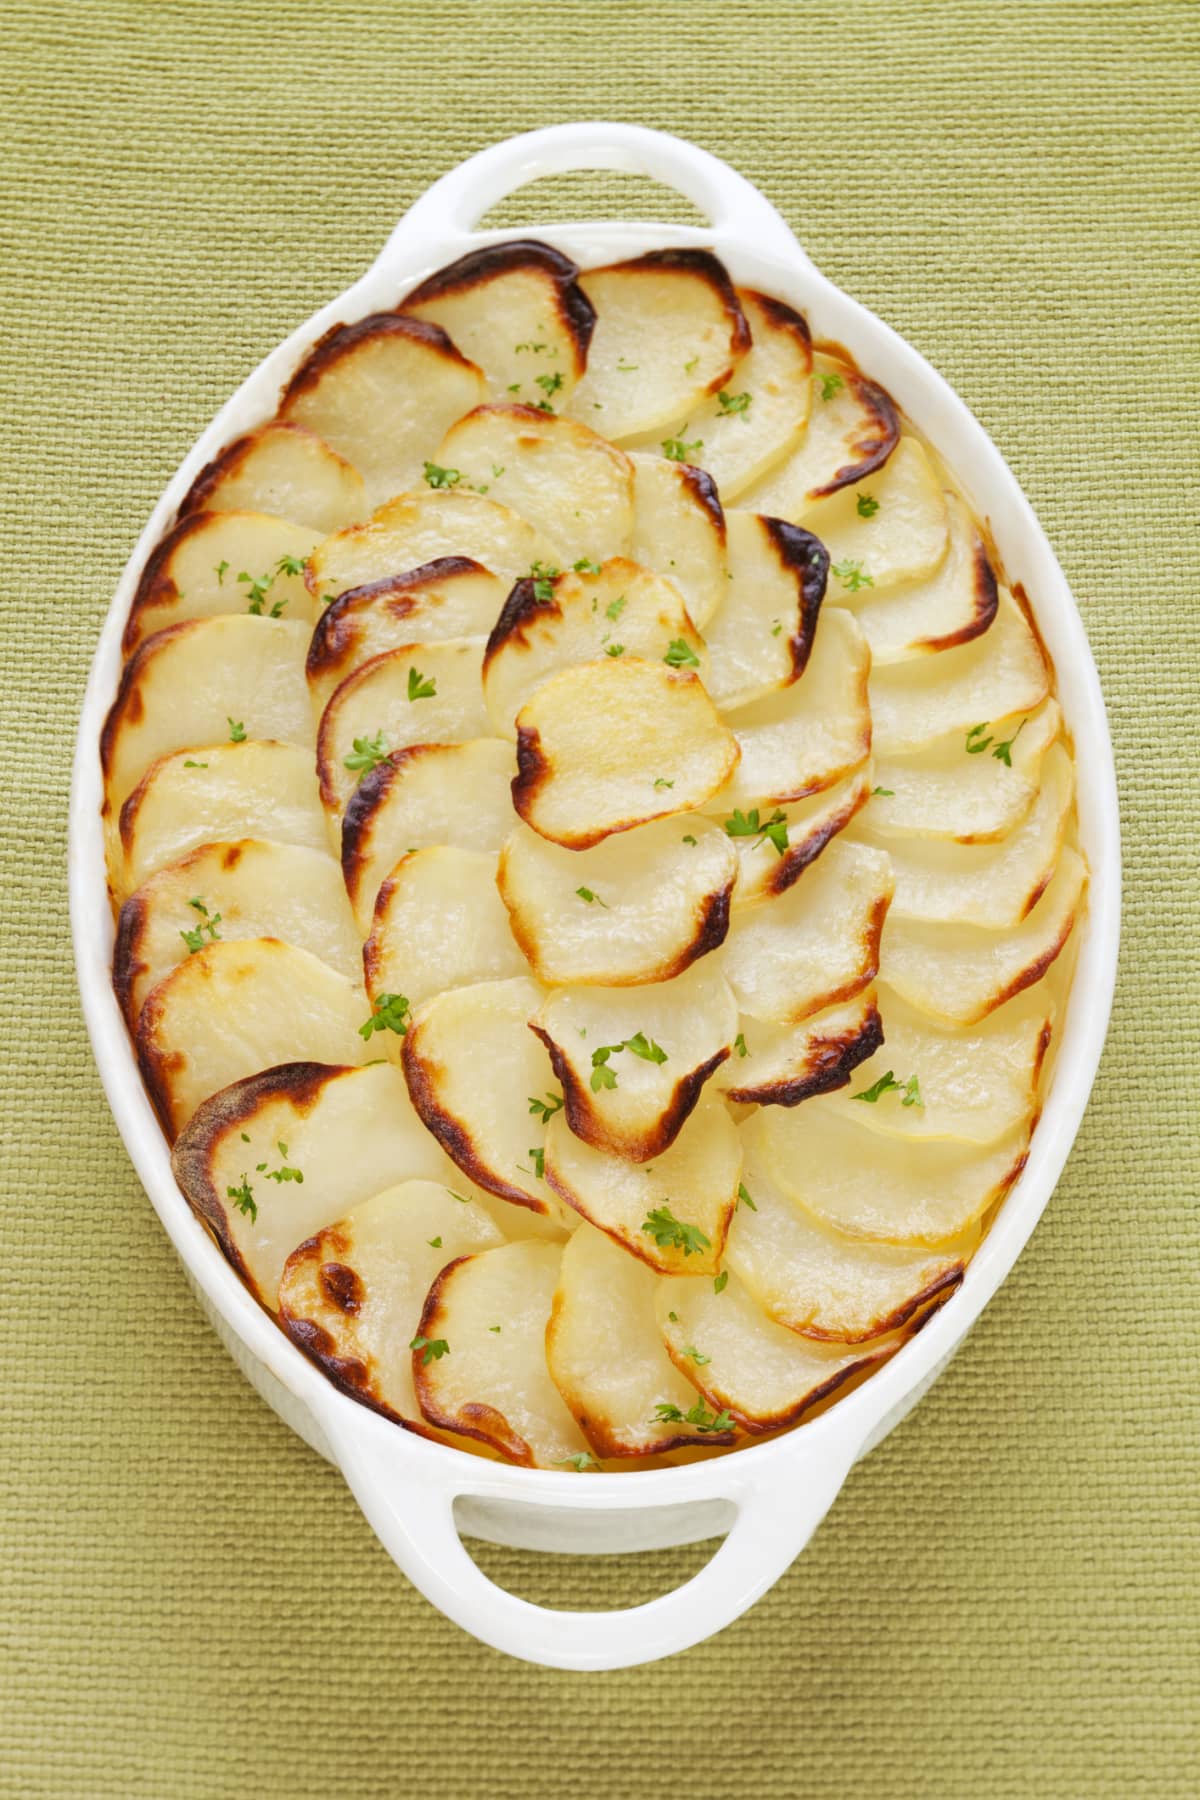 Scalloped potatoes in white baking dish